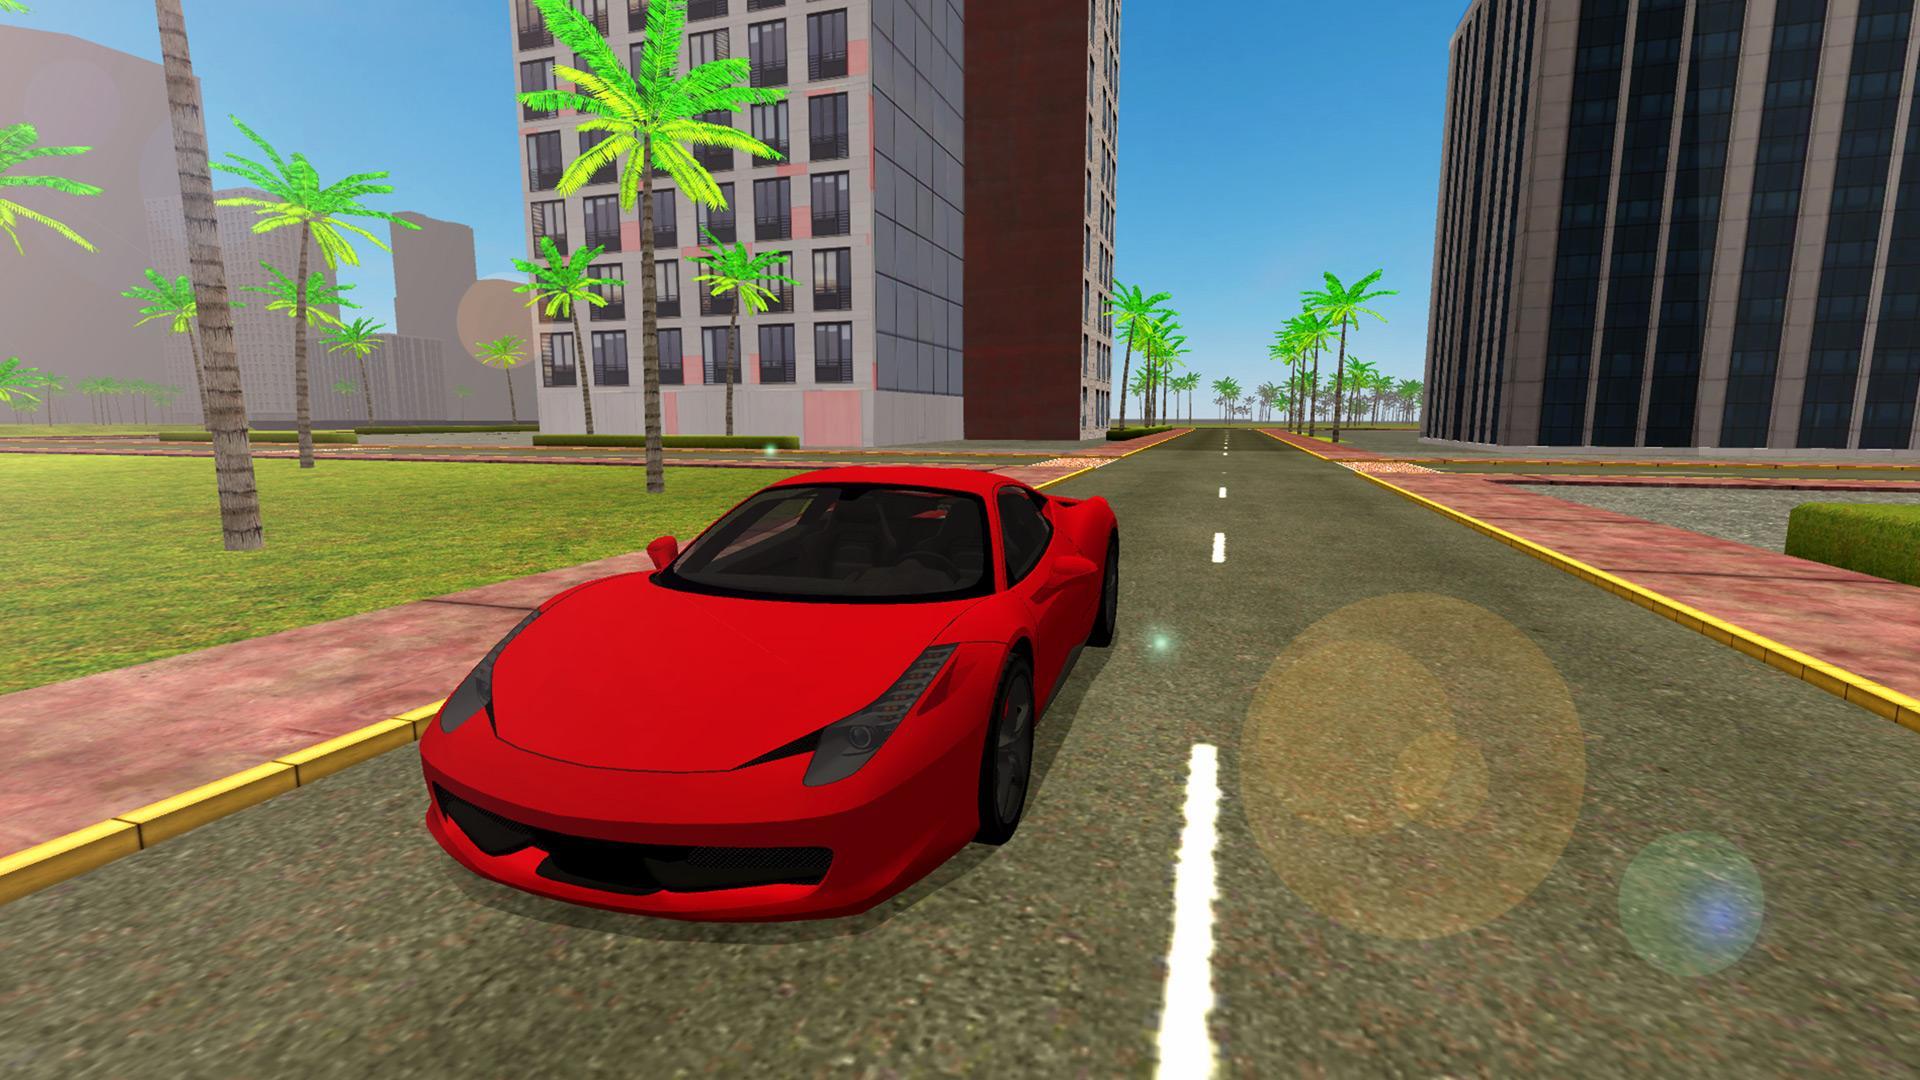 Screenshot 1 of Carros extremamente rápidos 1.1